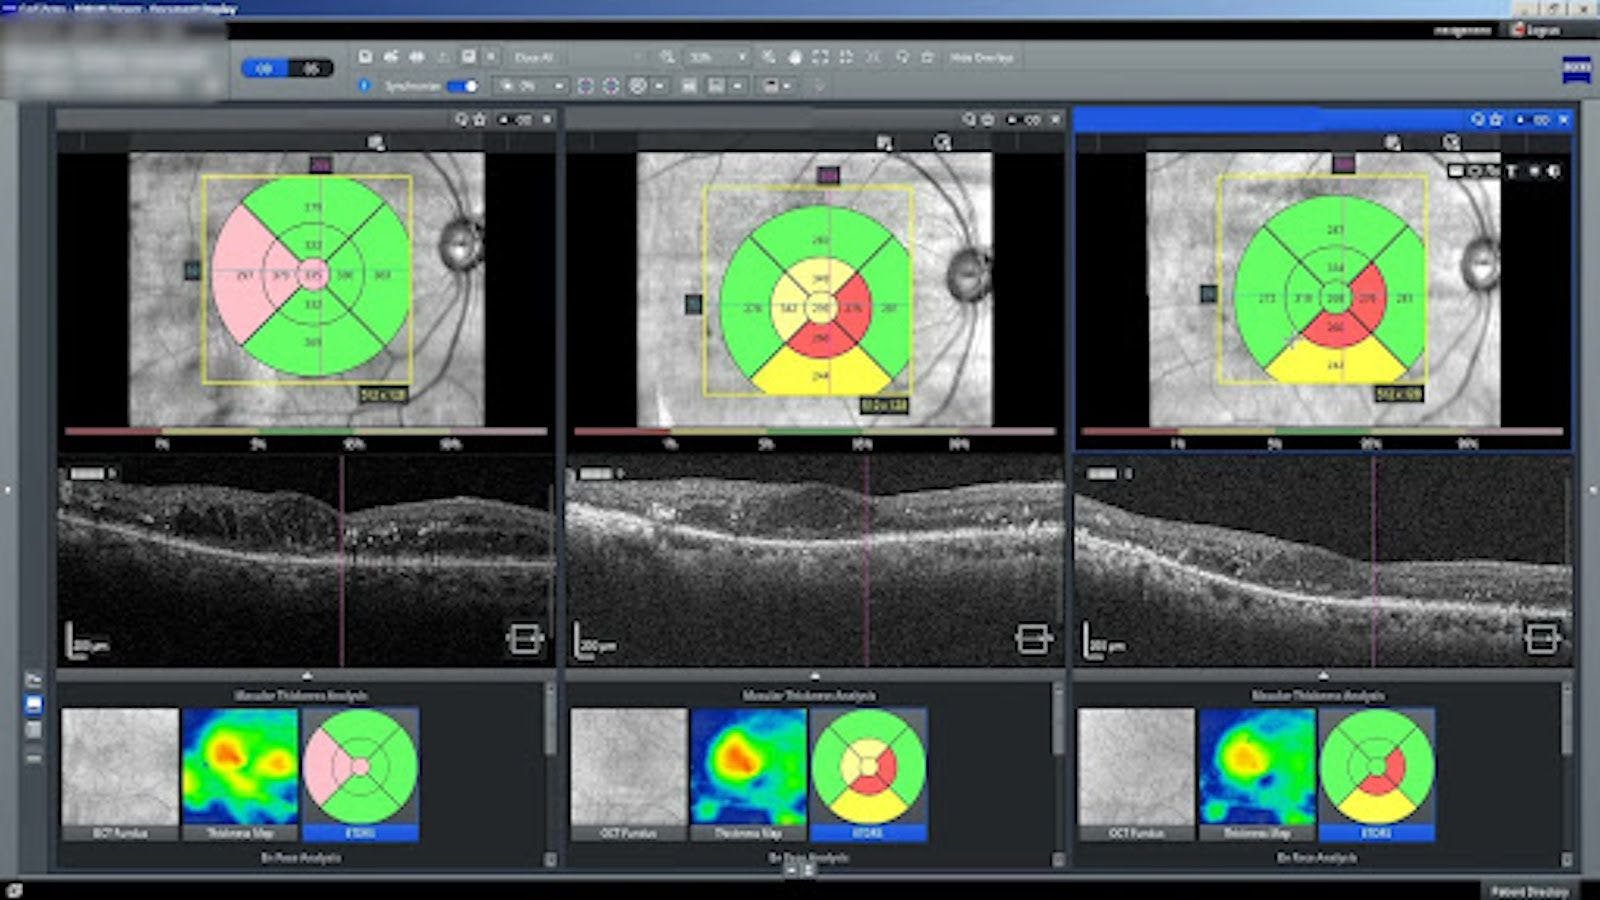 ETDRS grid showing non-proliferative diabetic retinopathy